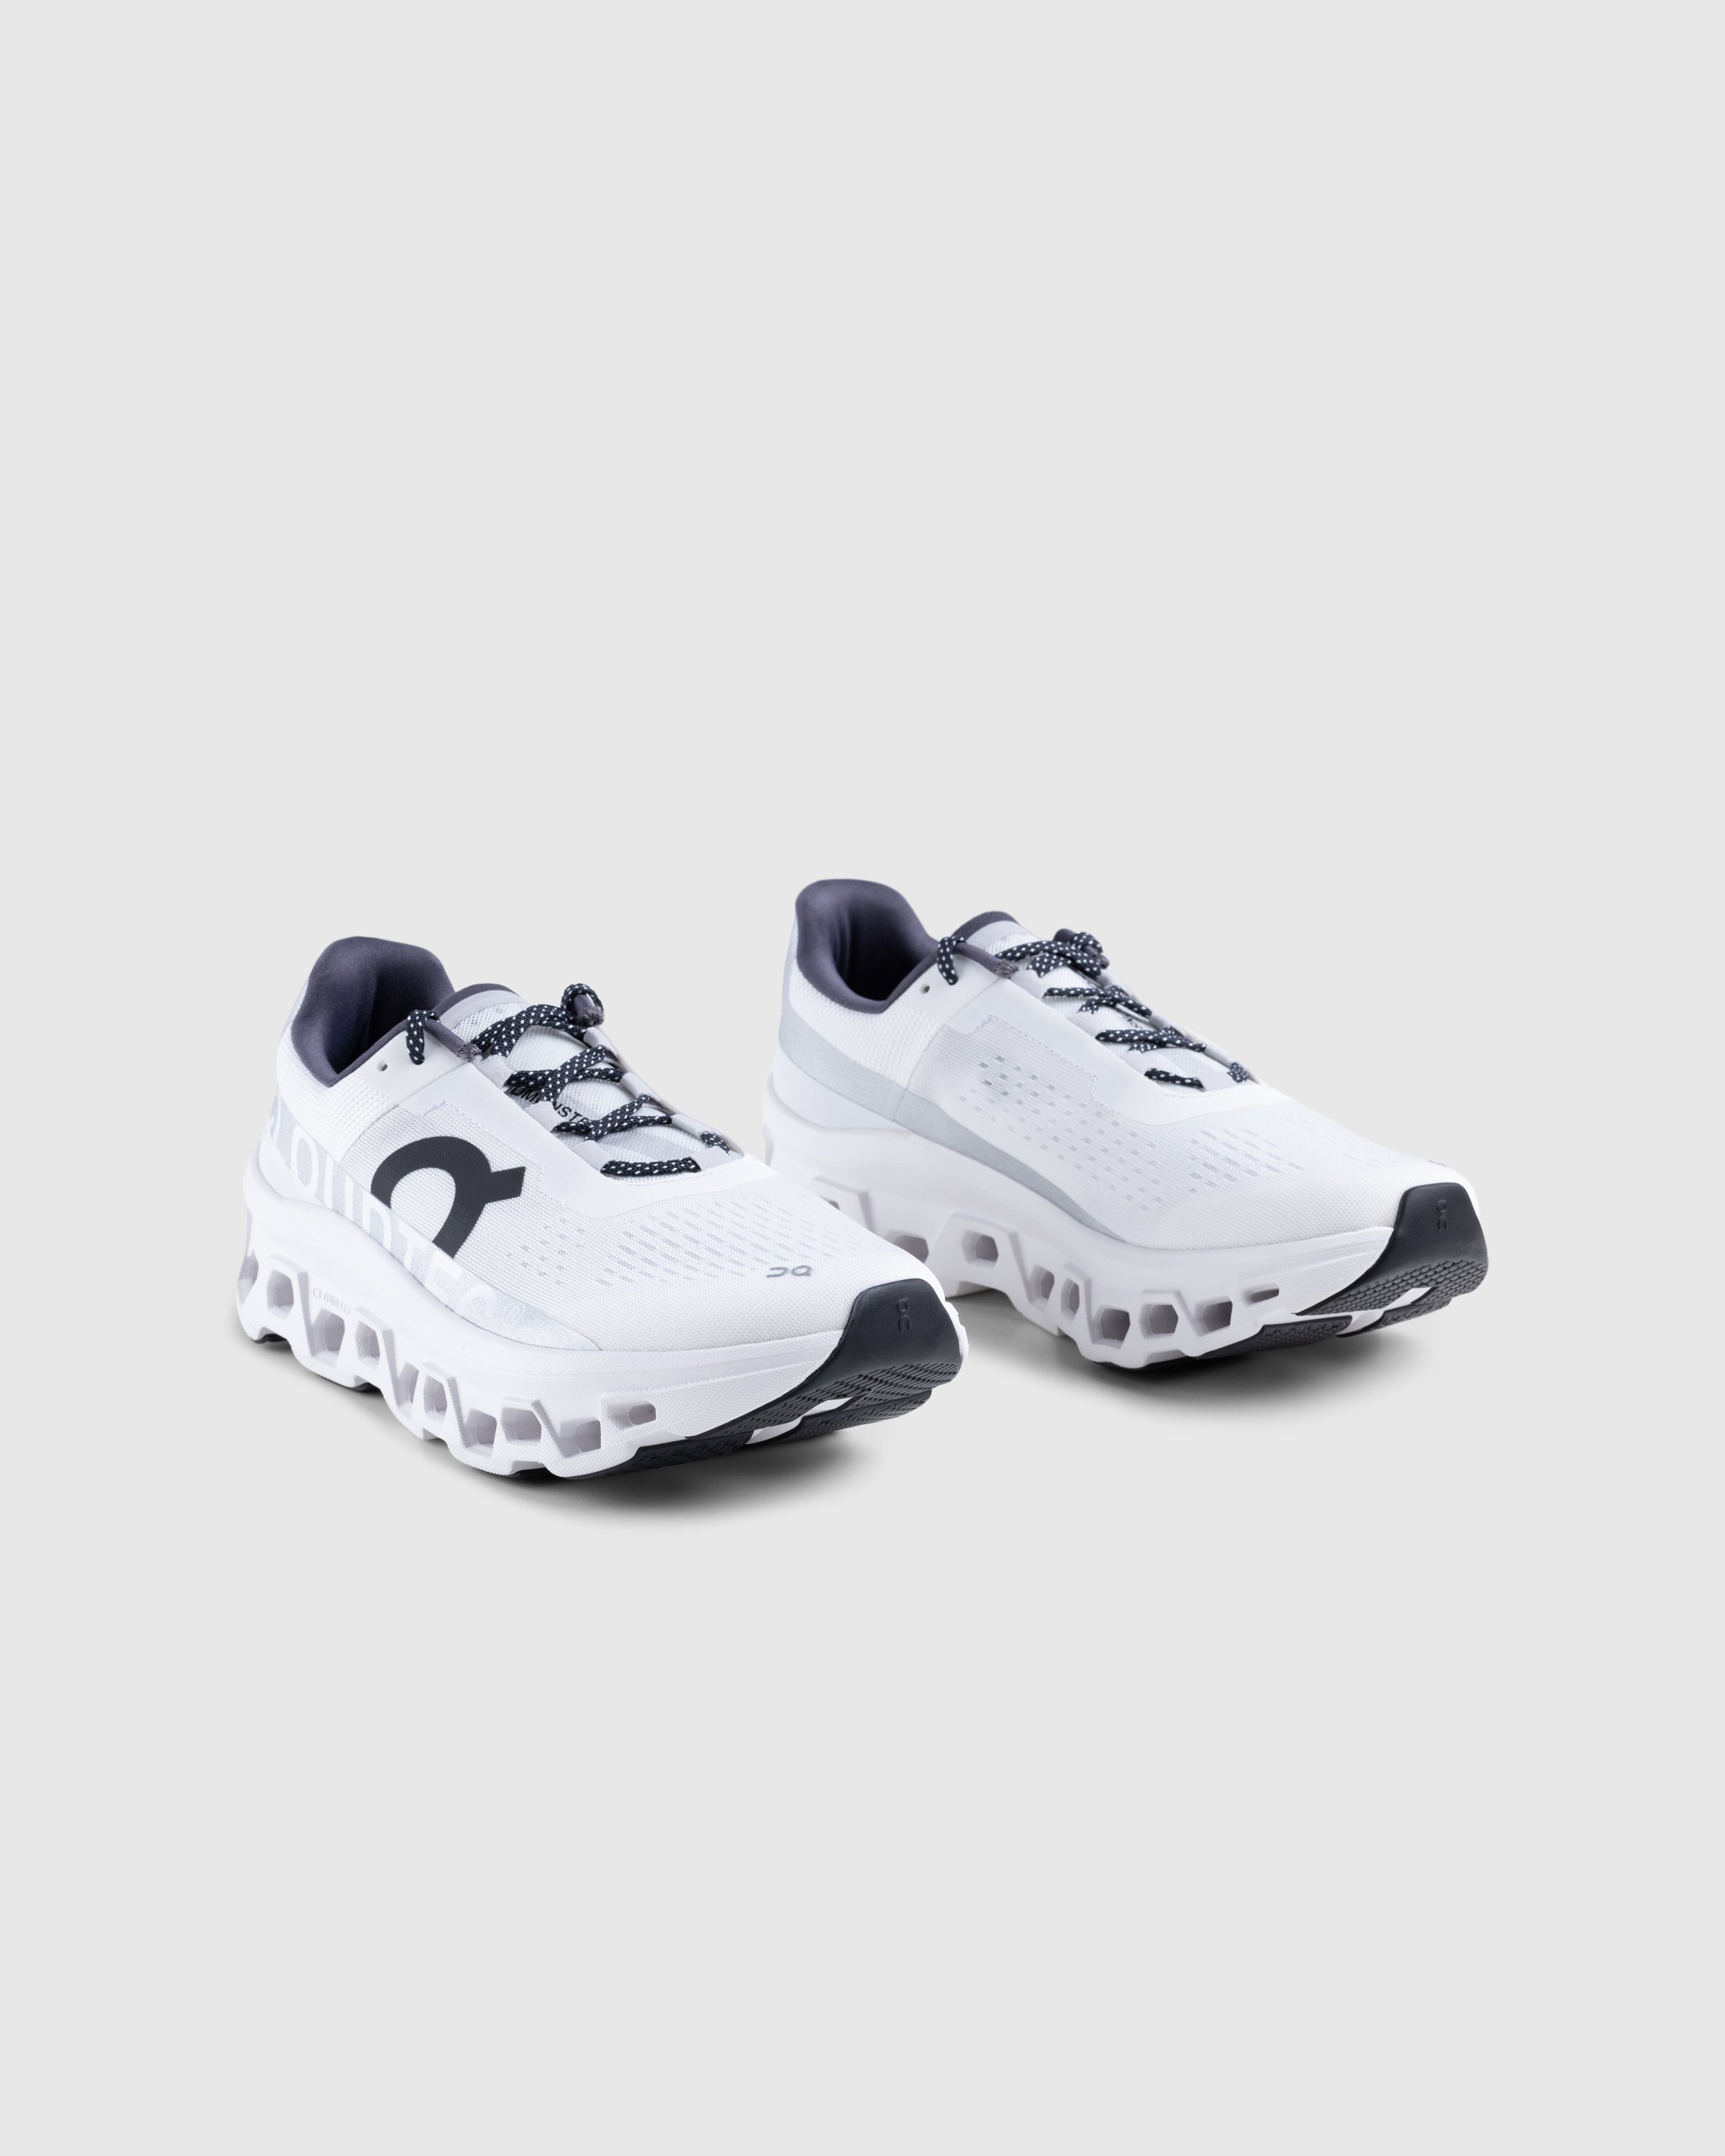 On - PAD Cloudmonster 1 M - Footwear - White - Image 3